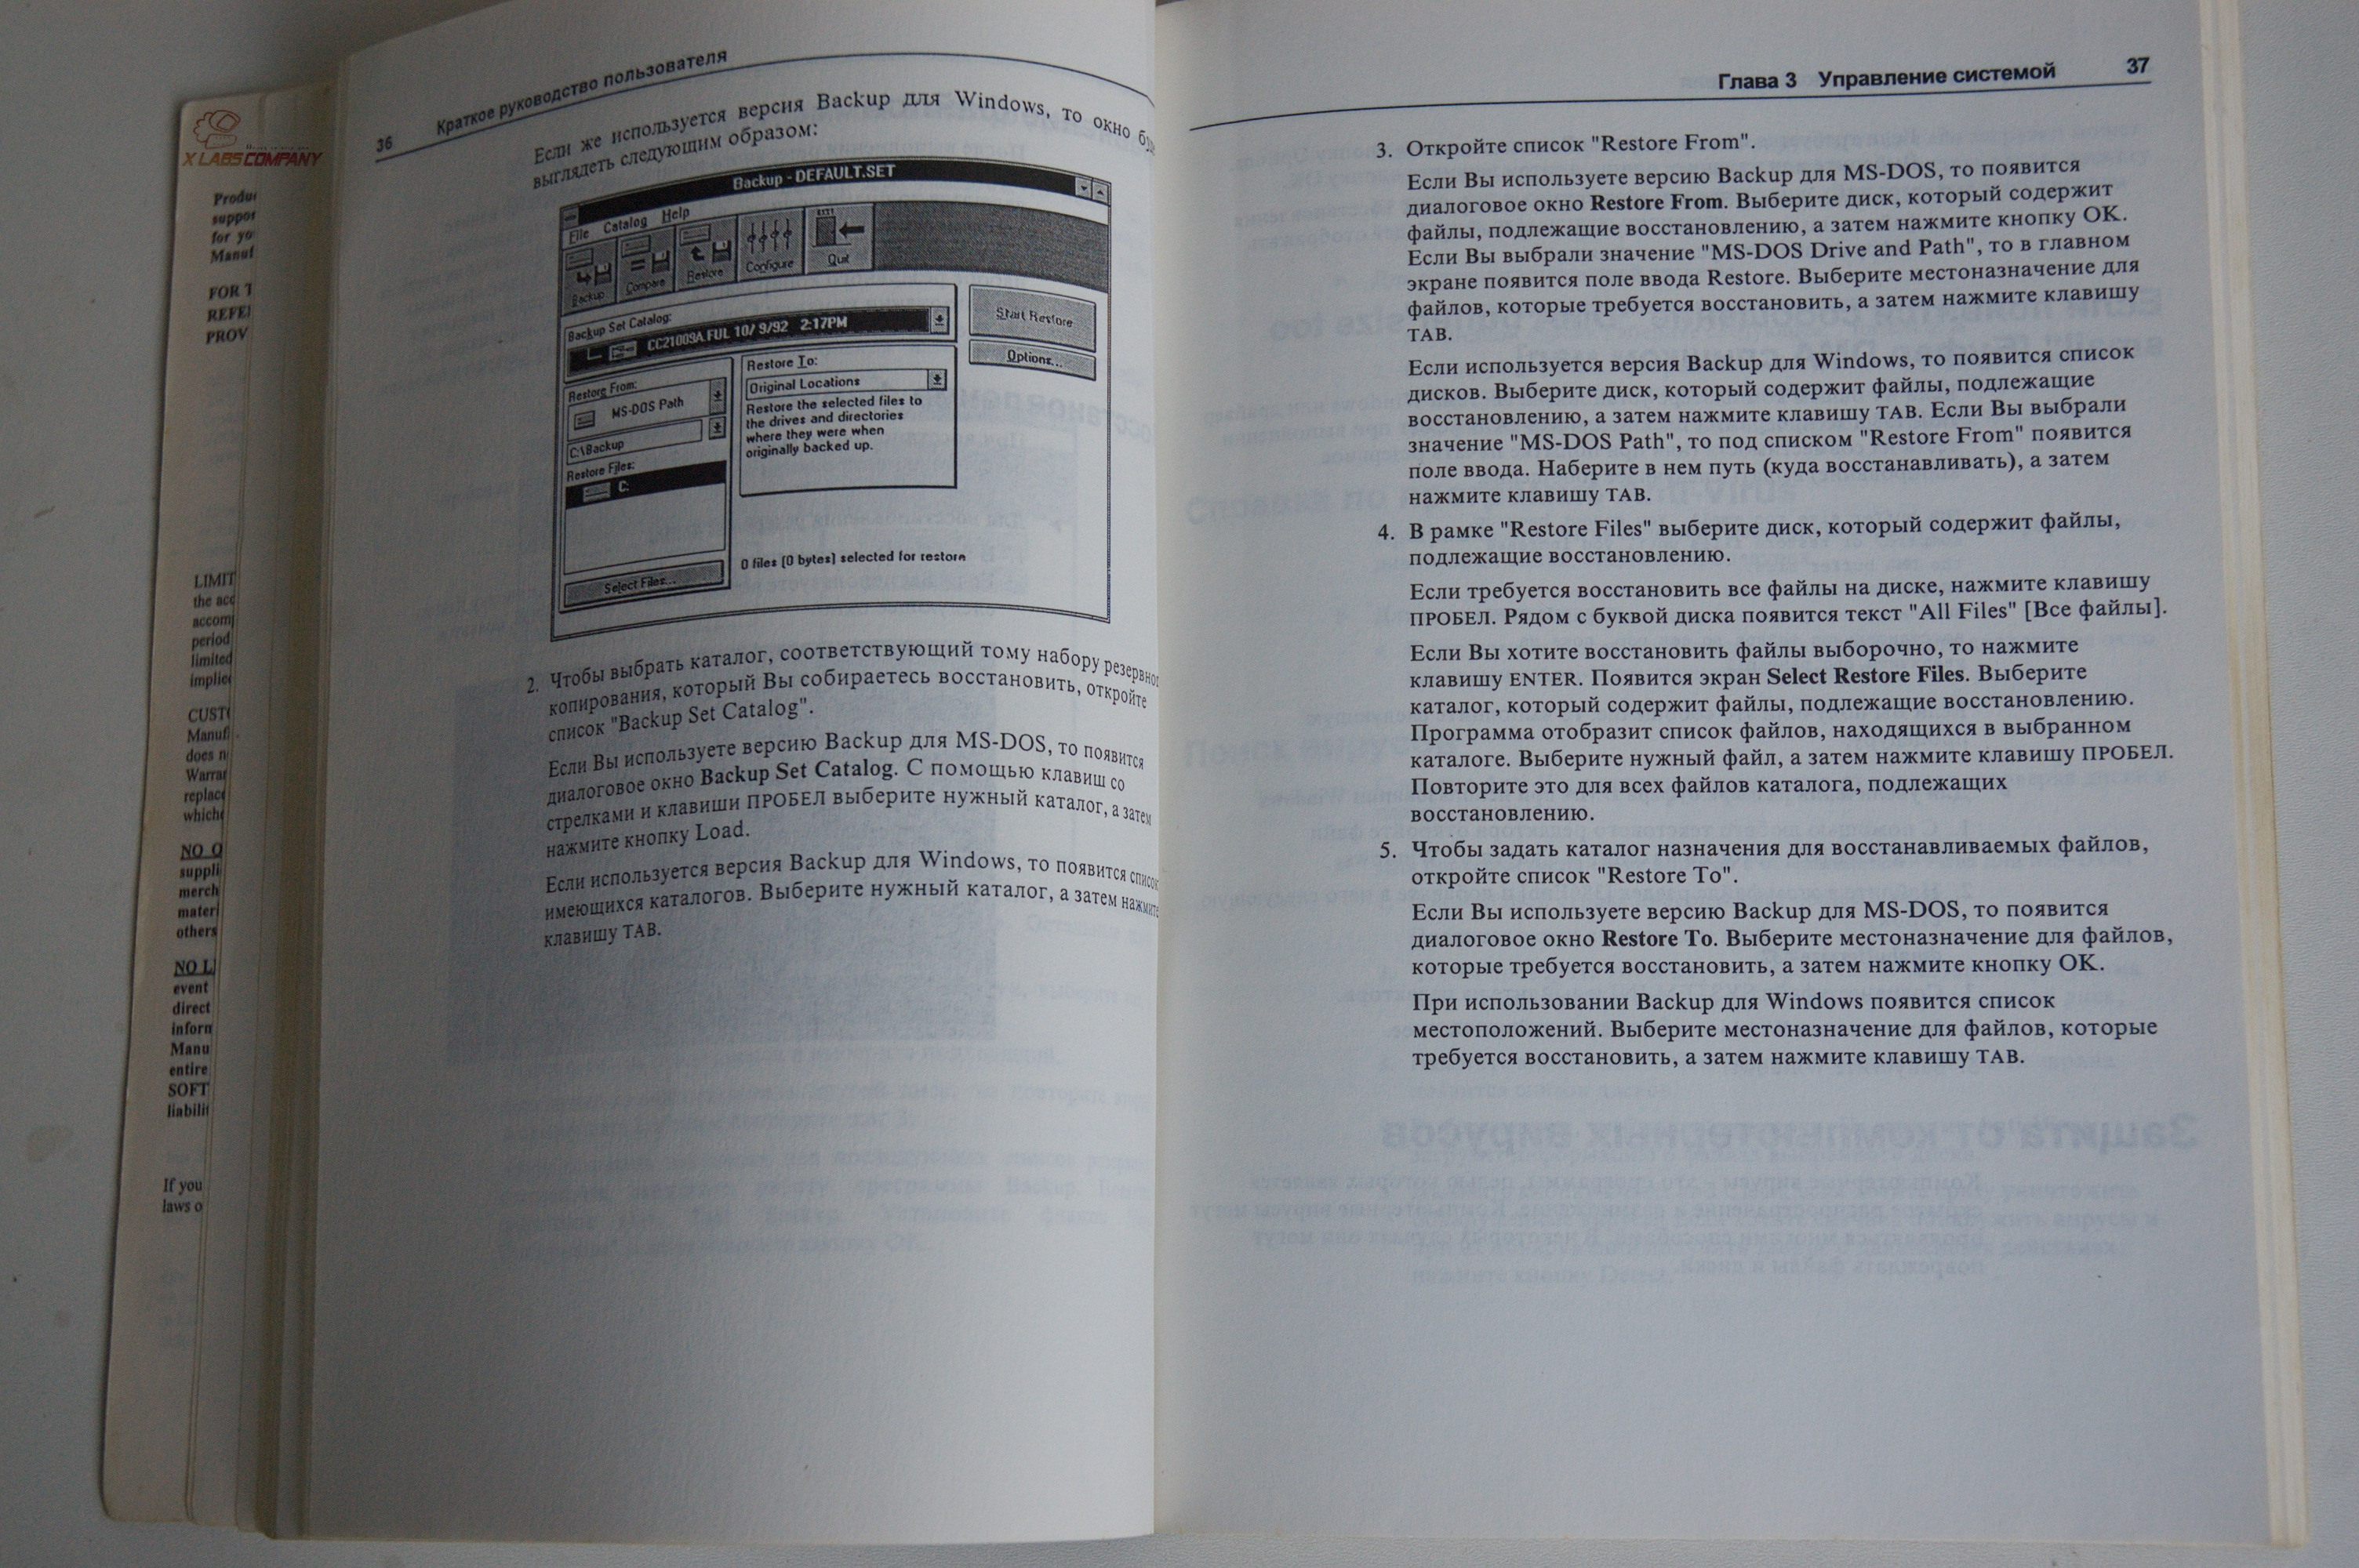 Общий план: брошура MS DOS 6.22 программа Backup